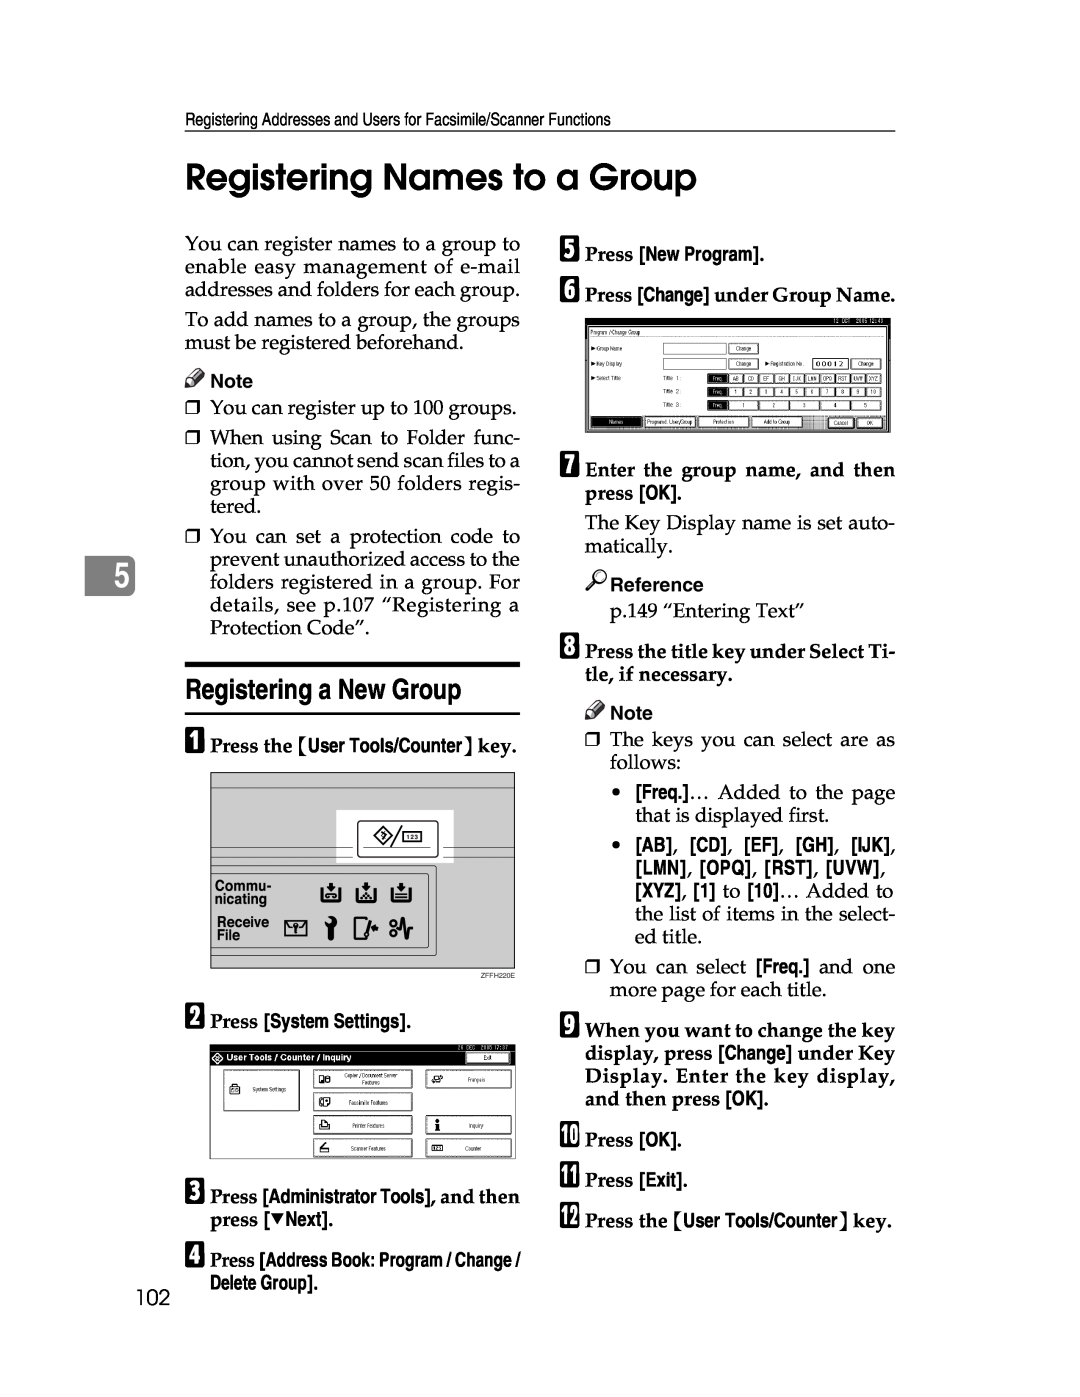 Lanier LD225 Registering Names to a Group, Registering a New Group, D Press Address Book Program / Change / Delete Group 